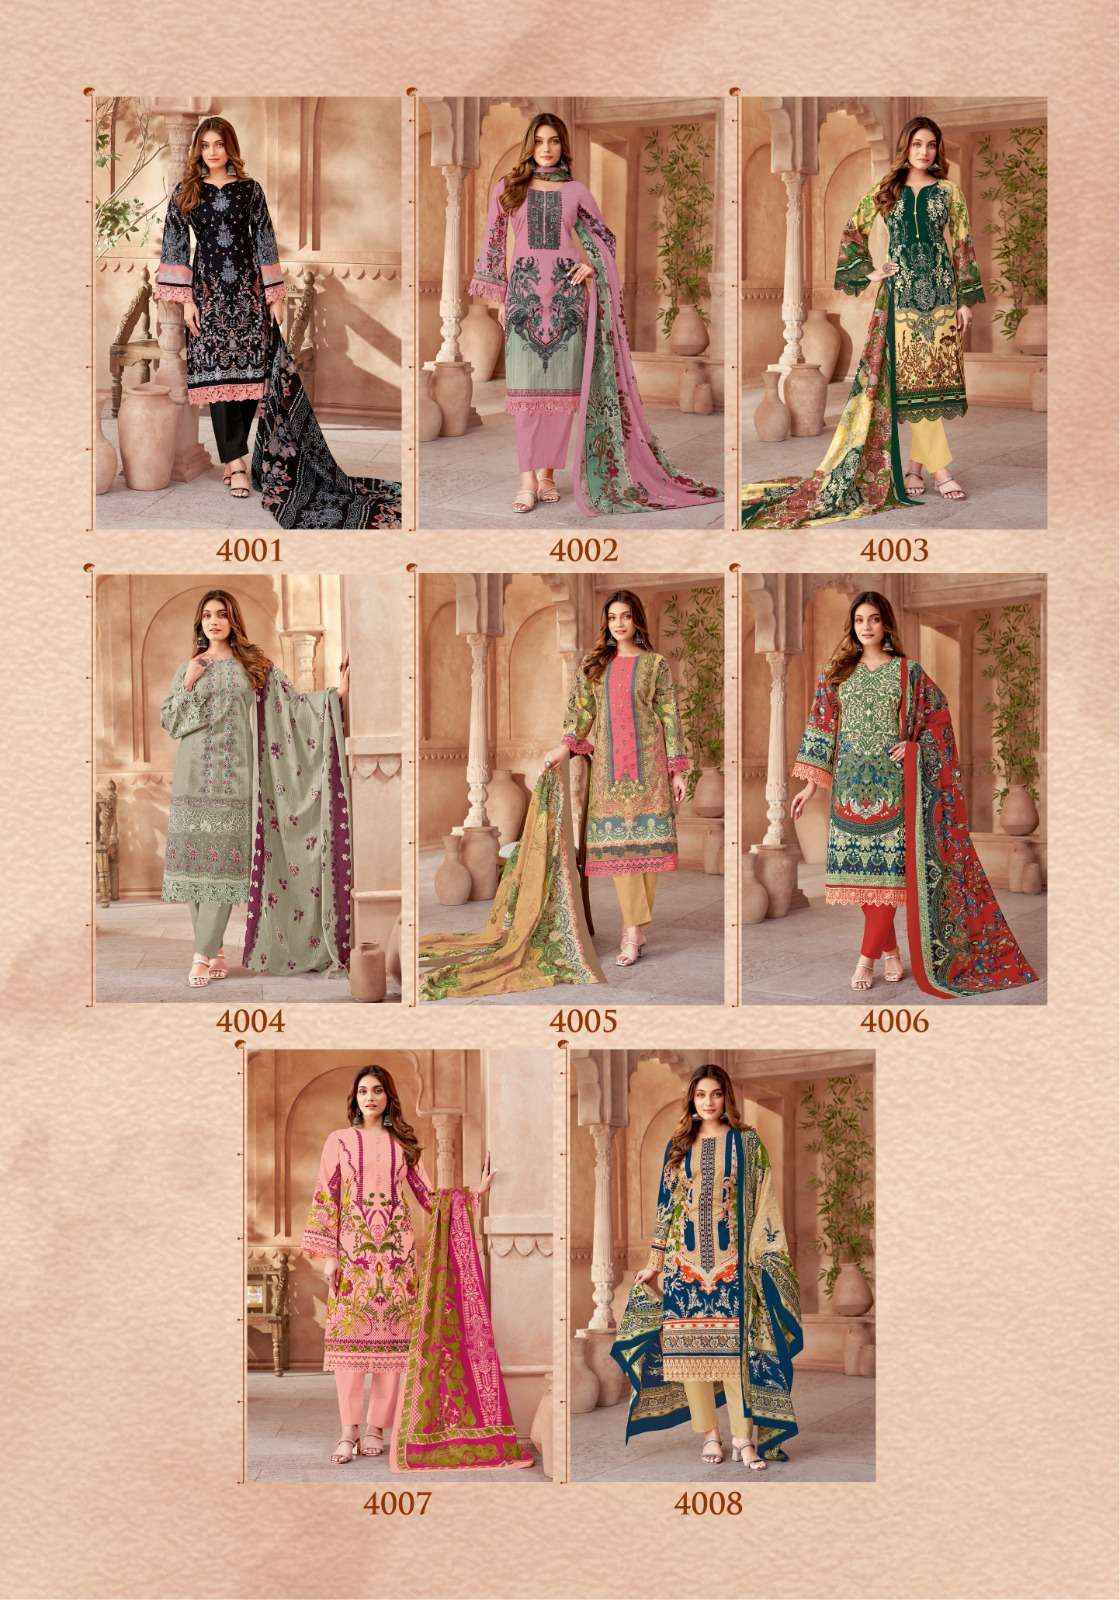 Mayur Creation Nigar Vol-4 Cotton Dress Material 8 pcs Catalogue